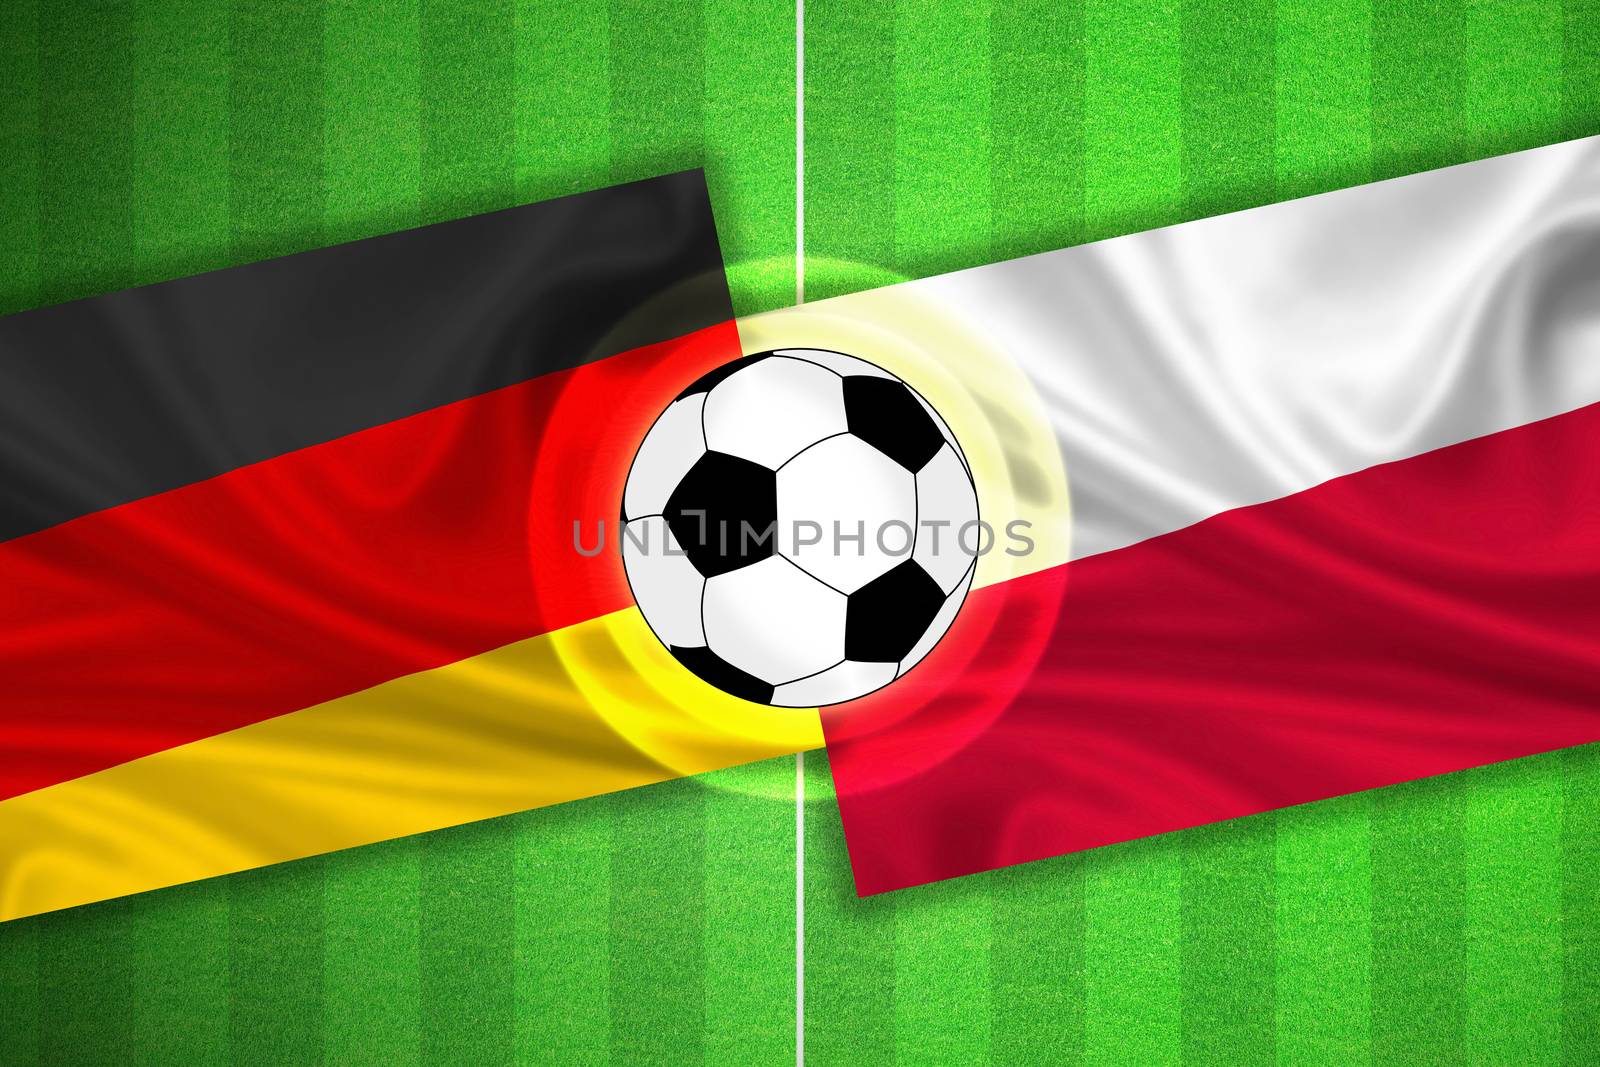 Germany - Poland - Soccer field with ball by aldorado